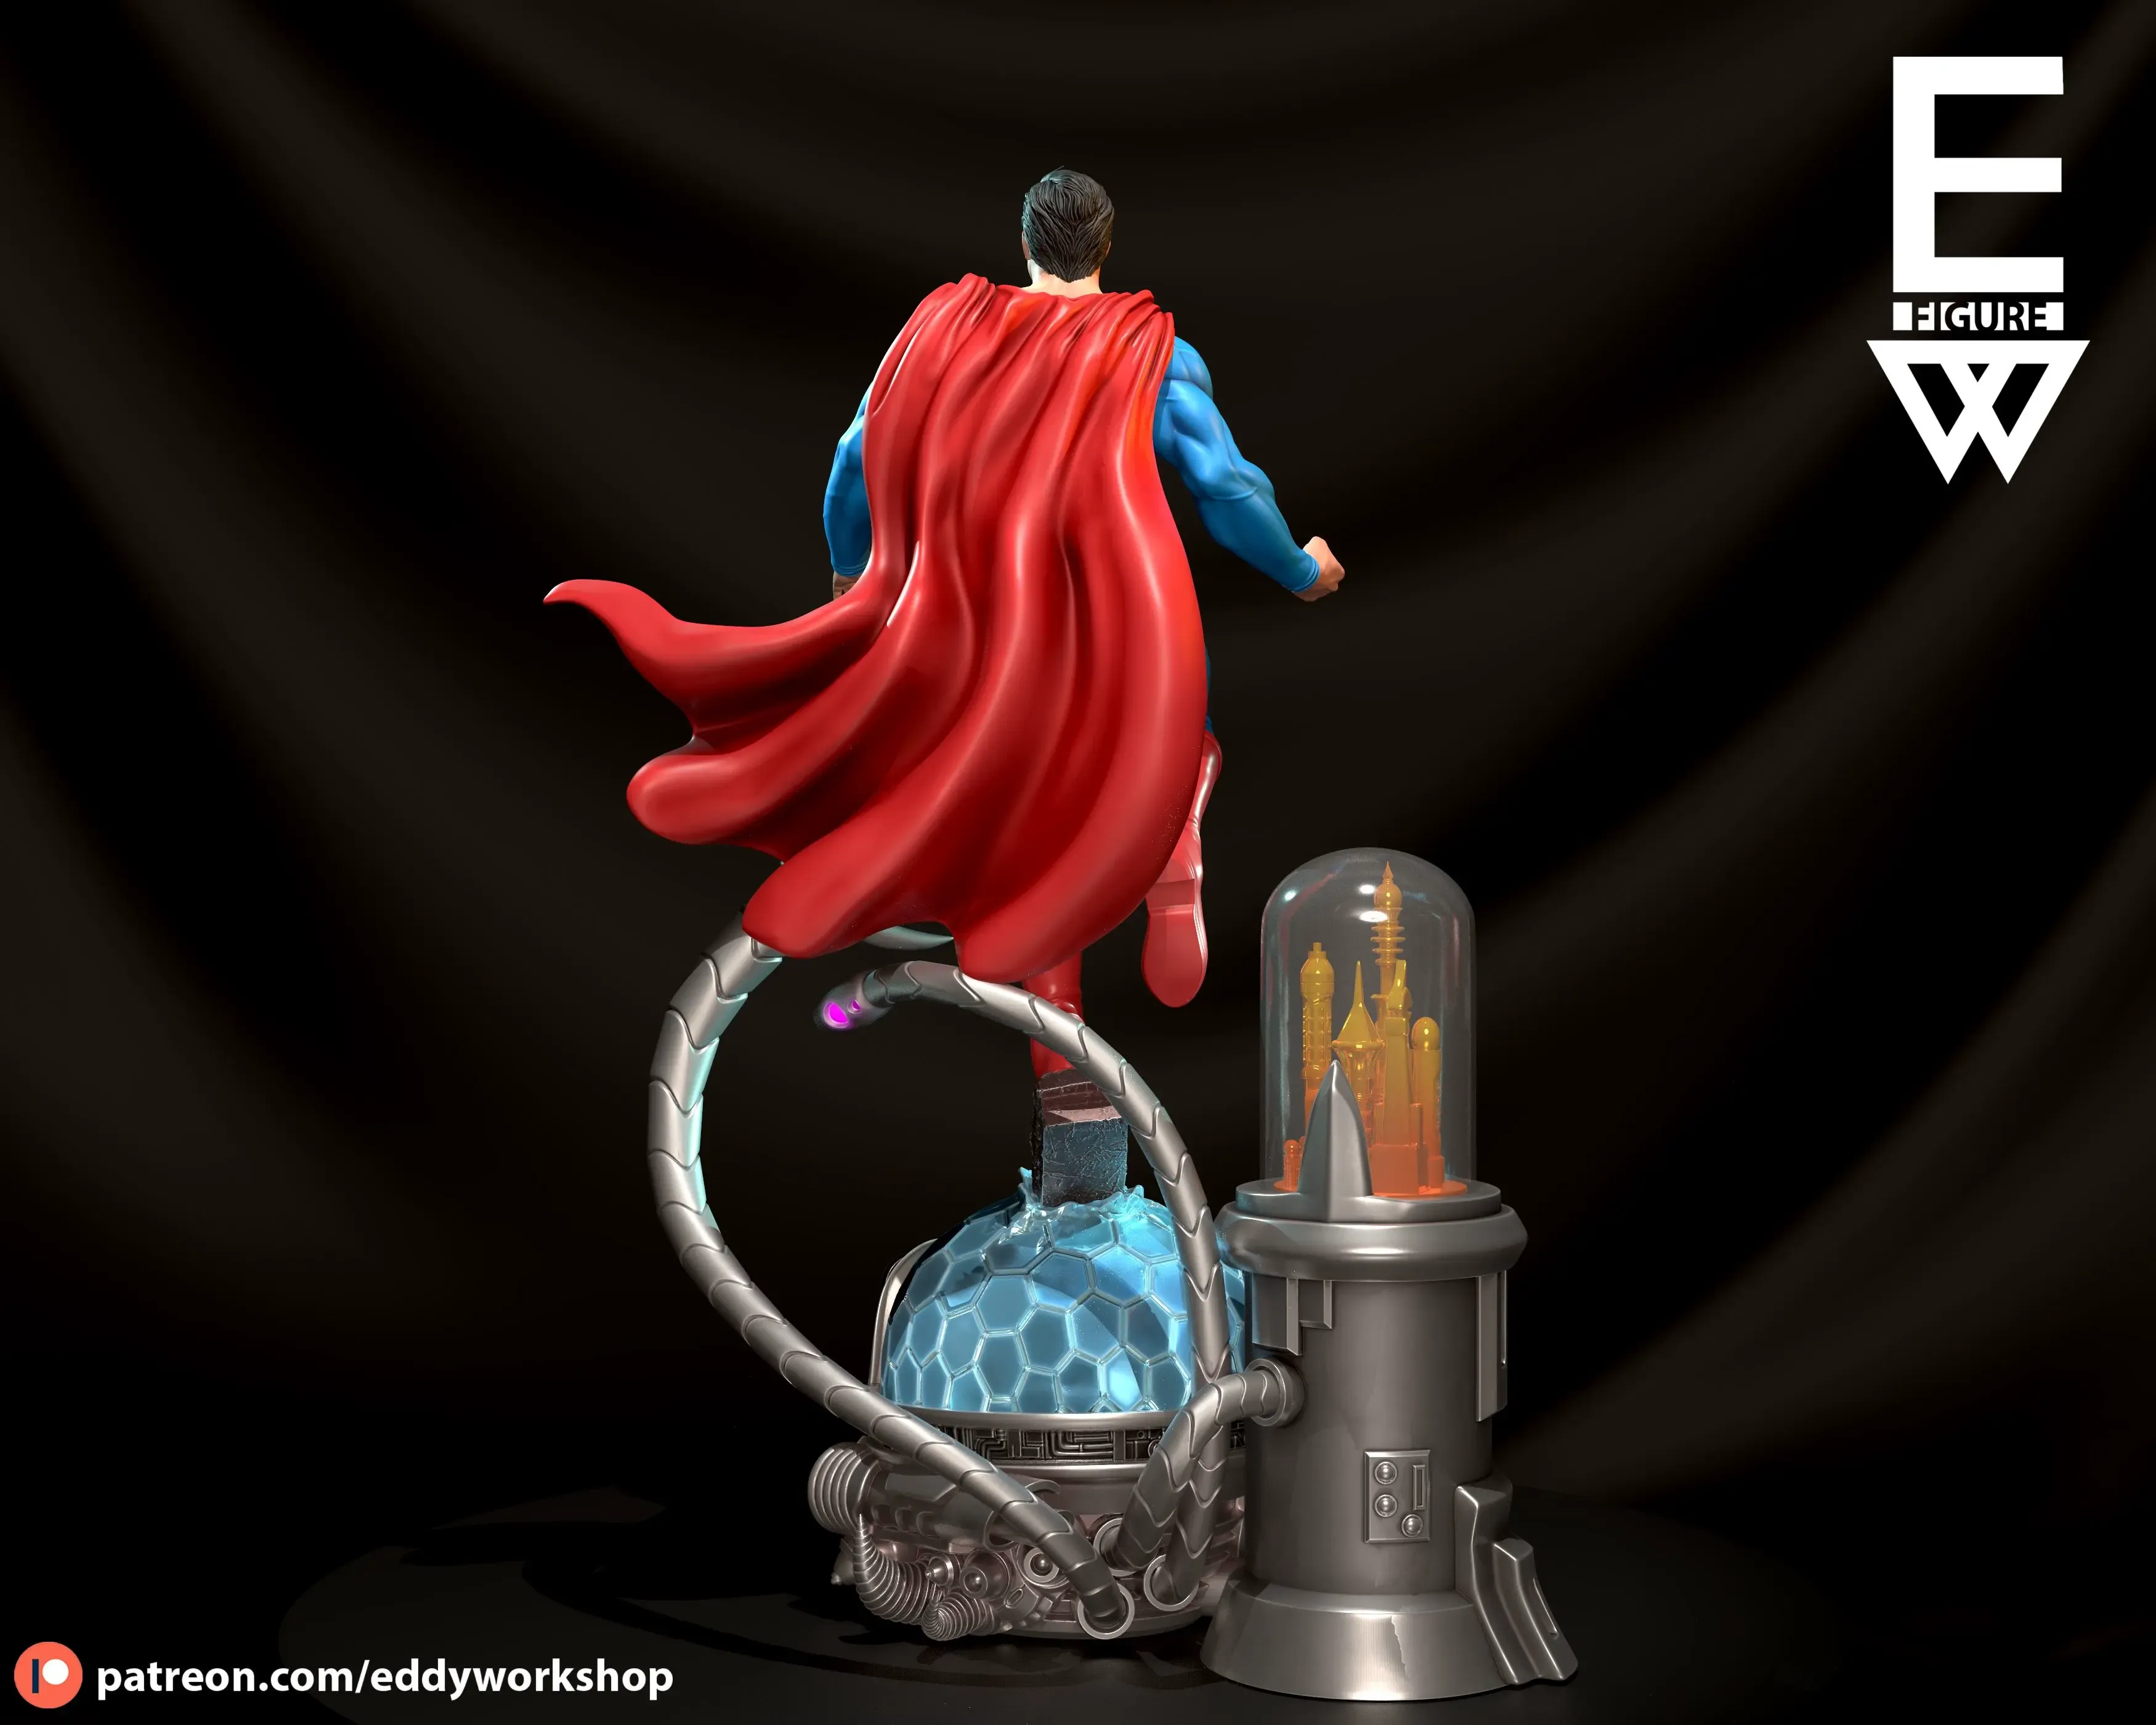 SUPERMAN - 3D STL READY TO PRINT